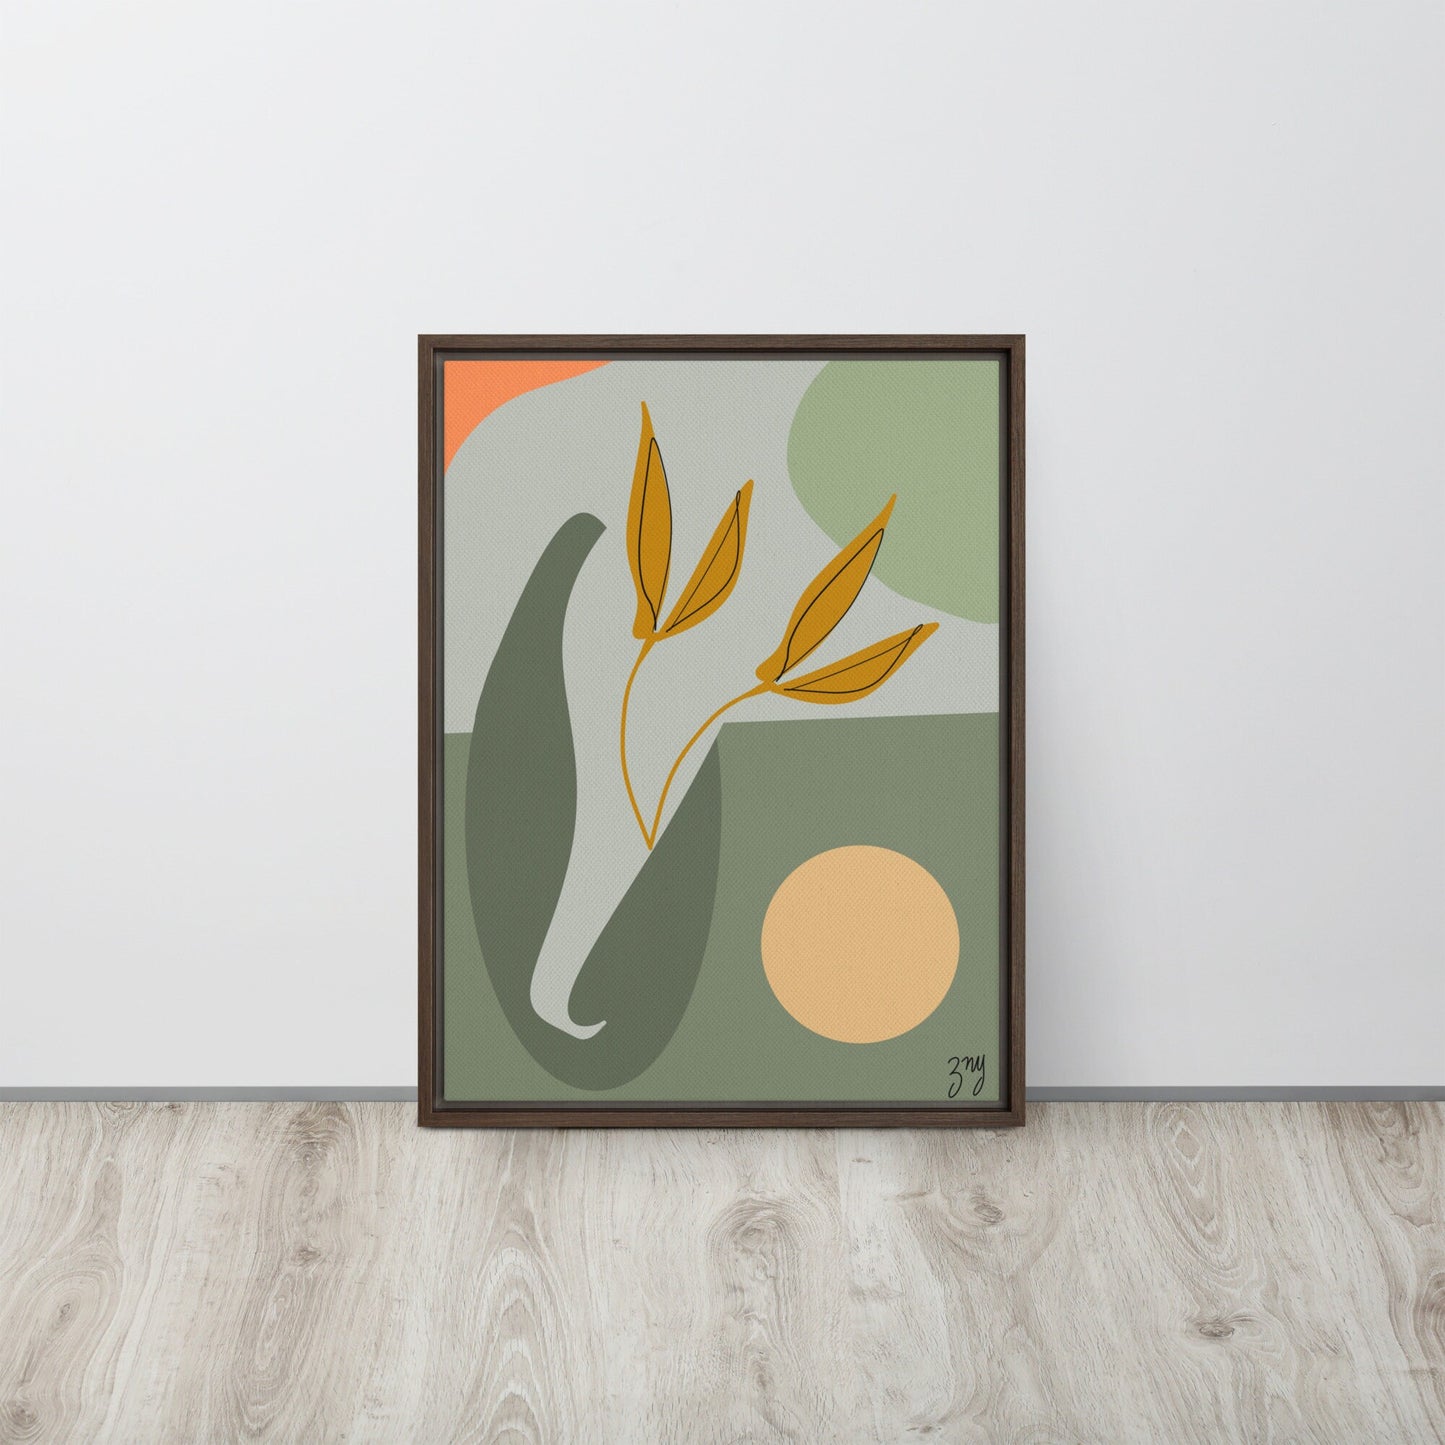 You Olive Green Framed Canvas Collection. Wall Art, Artwork, Abstract Art, Modern Art, Mid Century Art